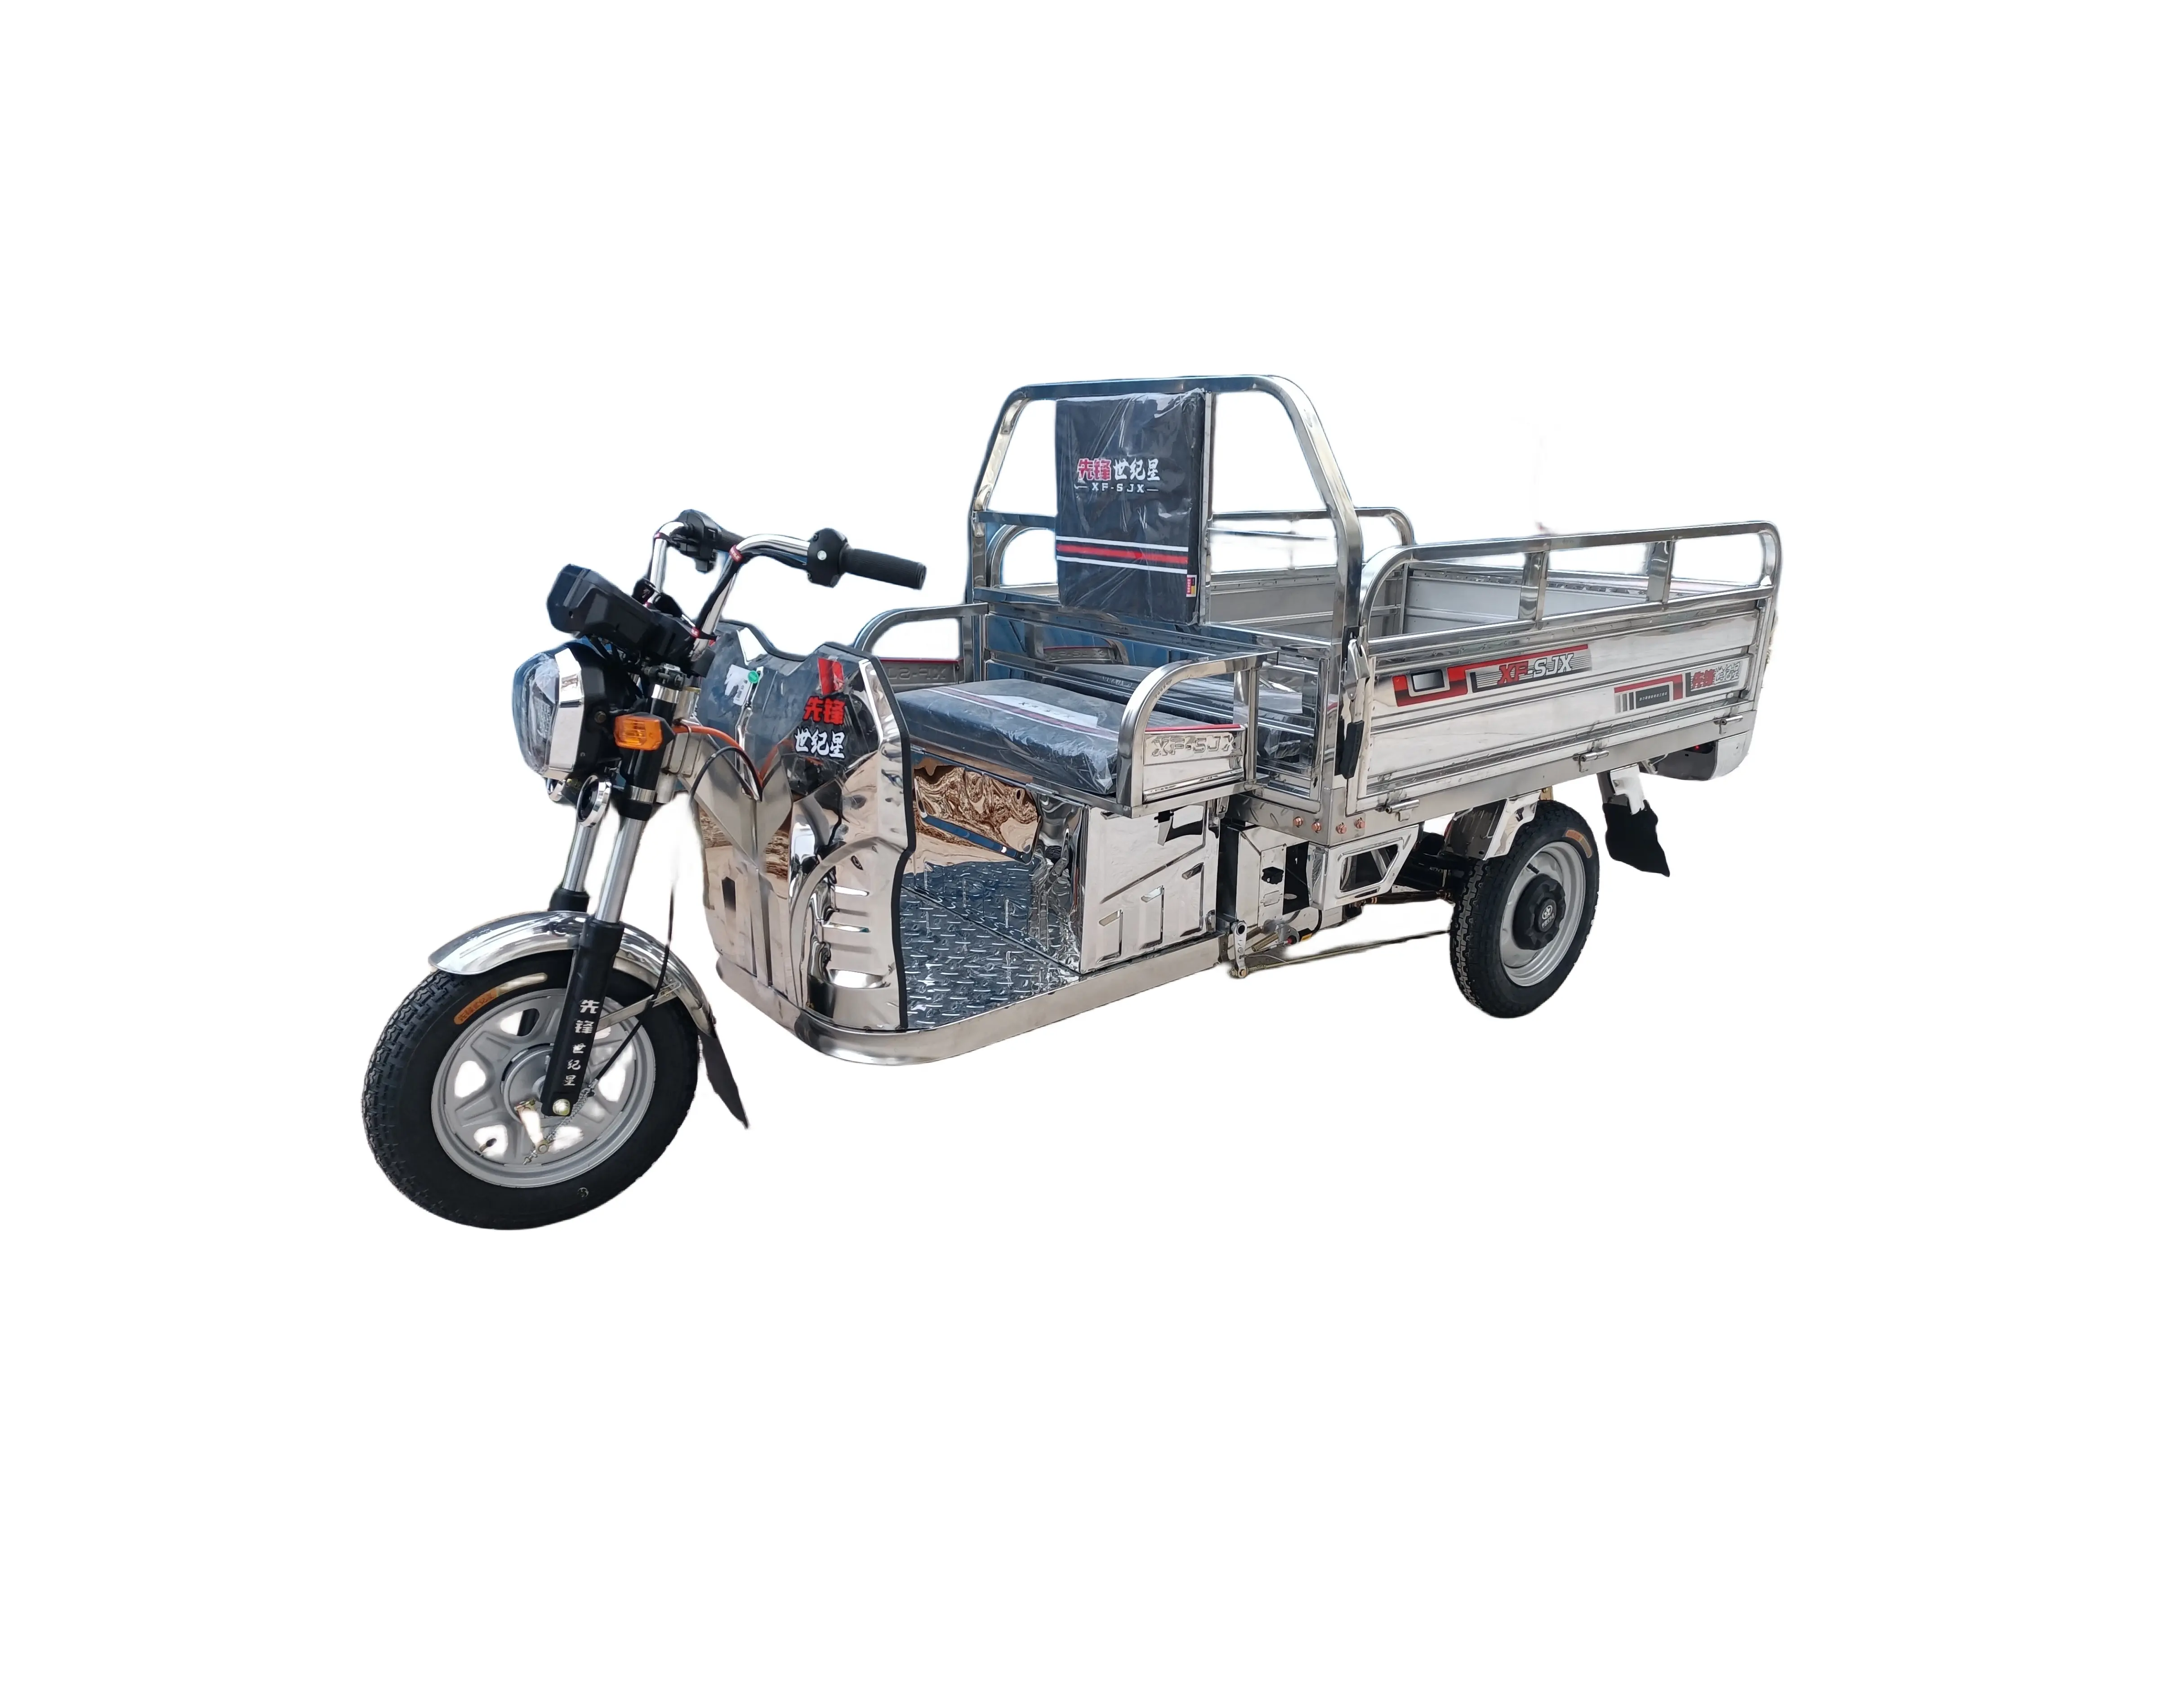 1000W motor 3 tekerlek elektrik kamyonet kargo rickshaw triciclo vagon üç tekerlekli bisiklet ile electrito kargo için electrico trike üç tekerlekli bisiklet